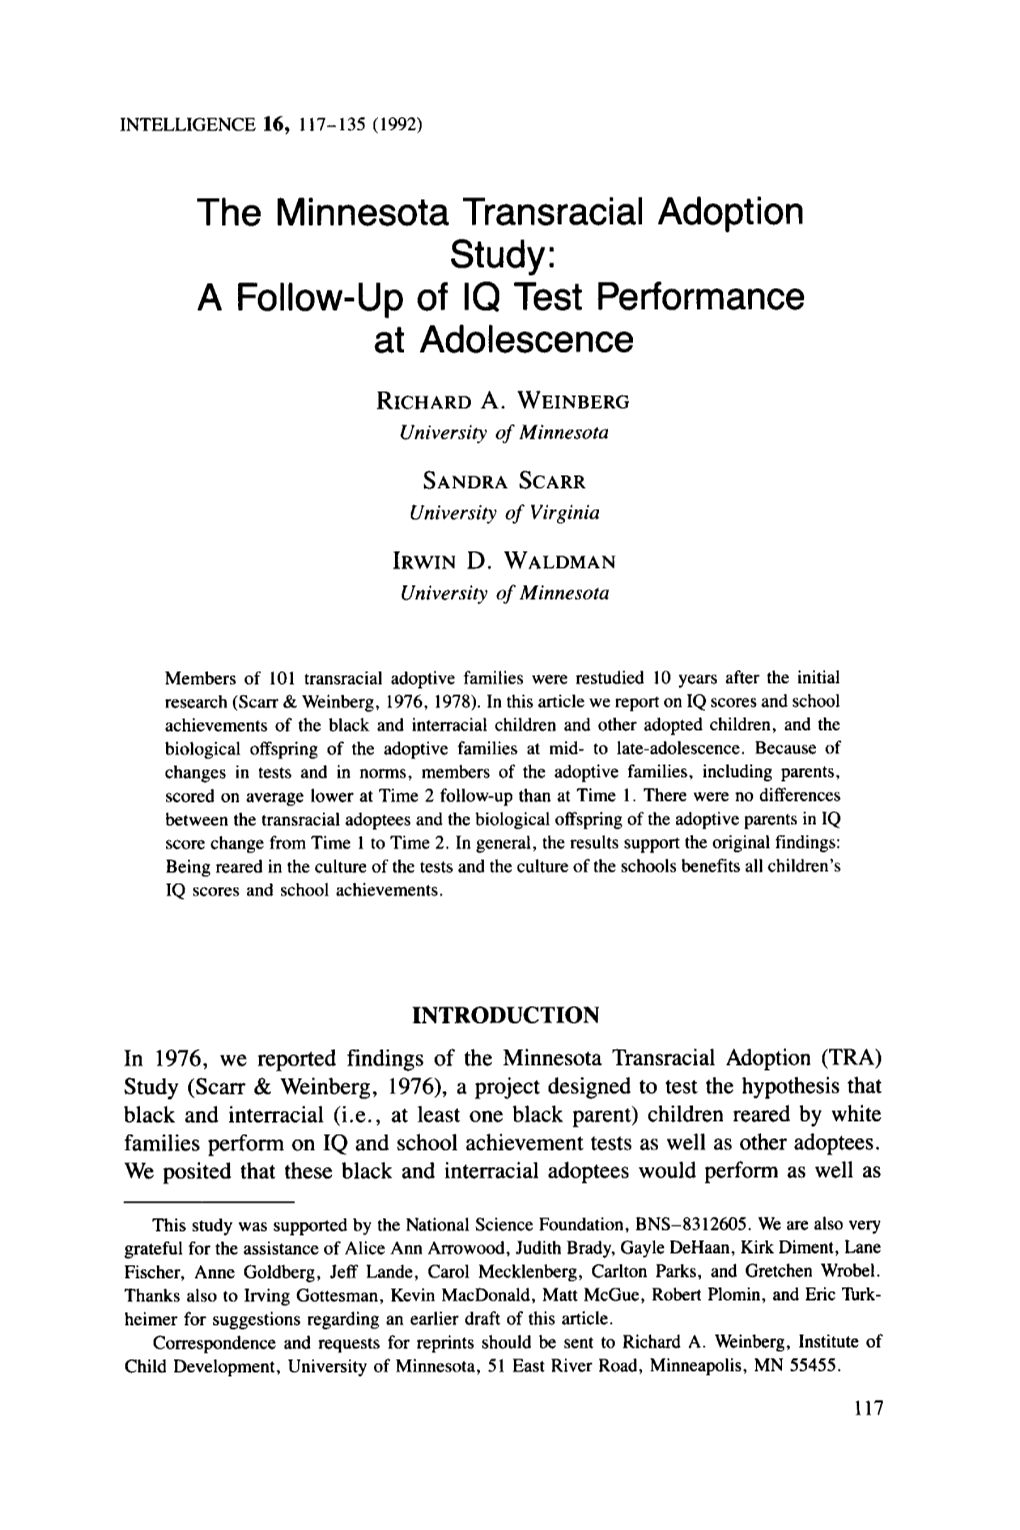 The Minnesota Transracial Adoption Study: a Follow-Up of IQ Test Performance at Adolescence